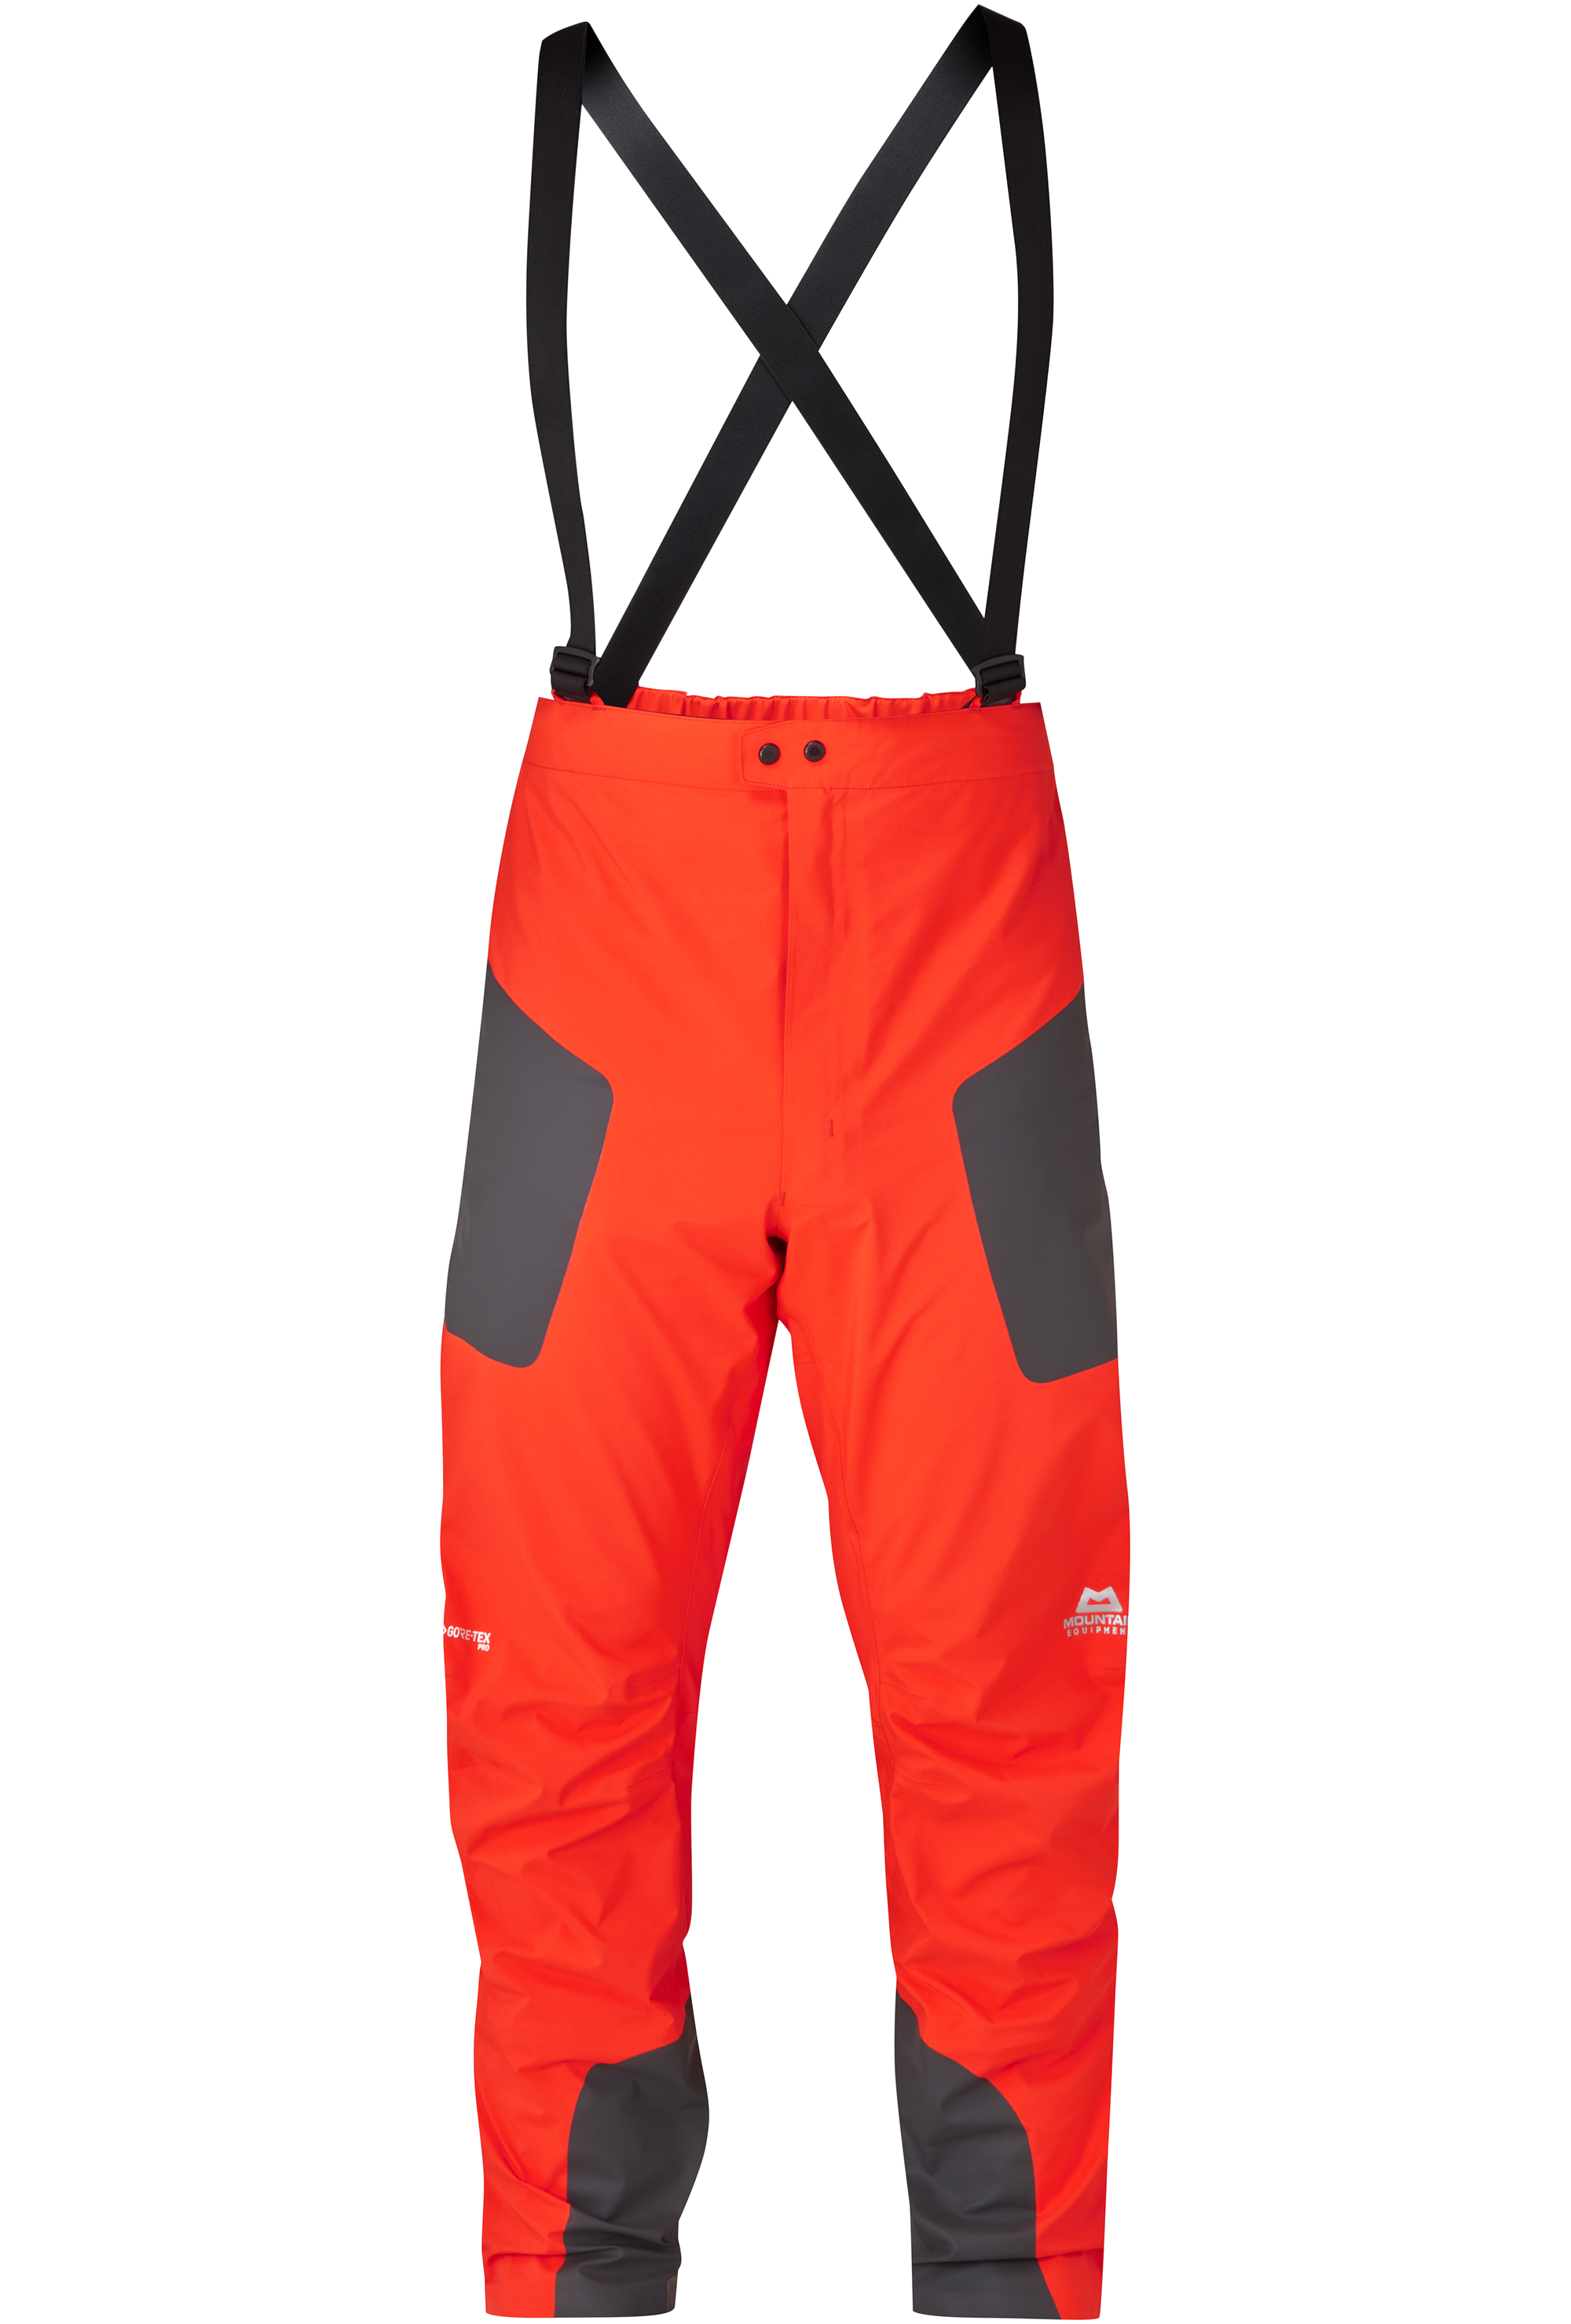 DE Mountain | GORE-TEX Equipment Pant Hose – PRO Mountain Tupilak Equipment